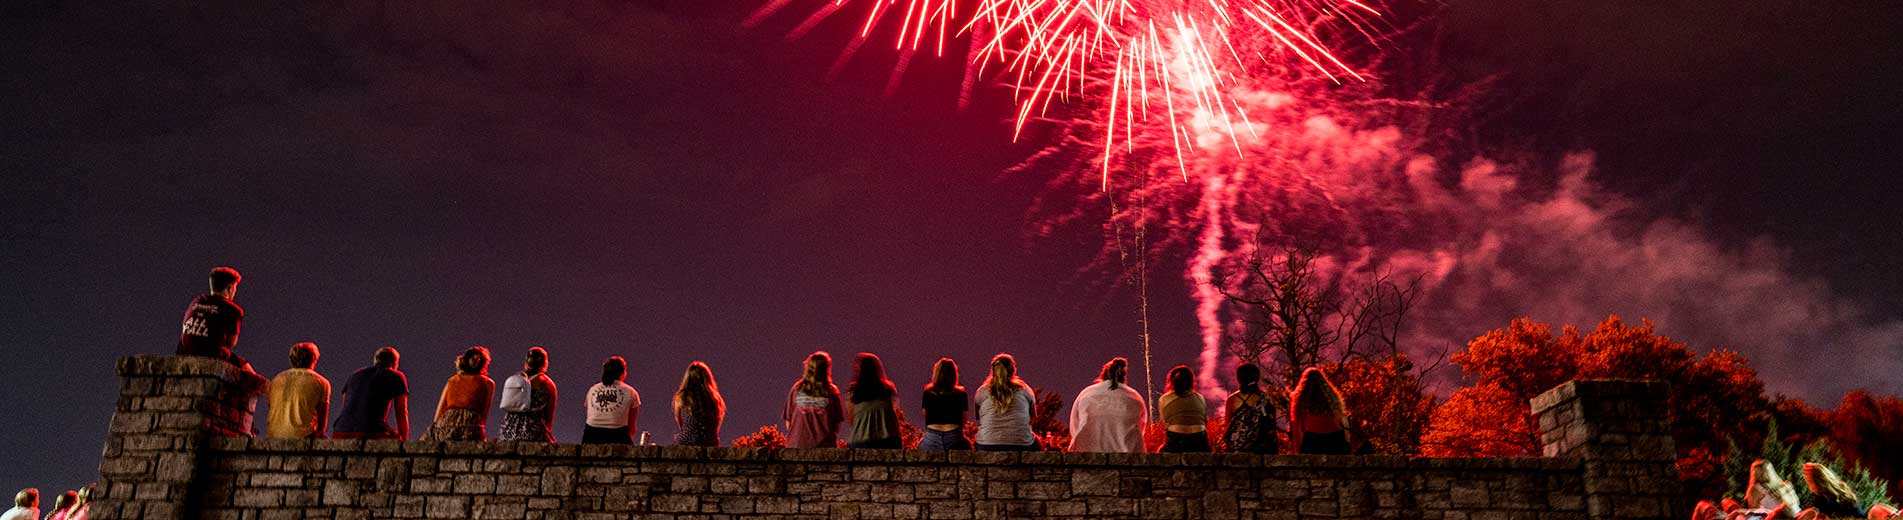 people sitting on a bridge watching fireworks